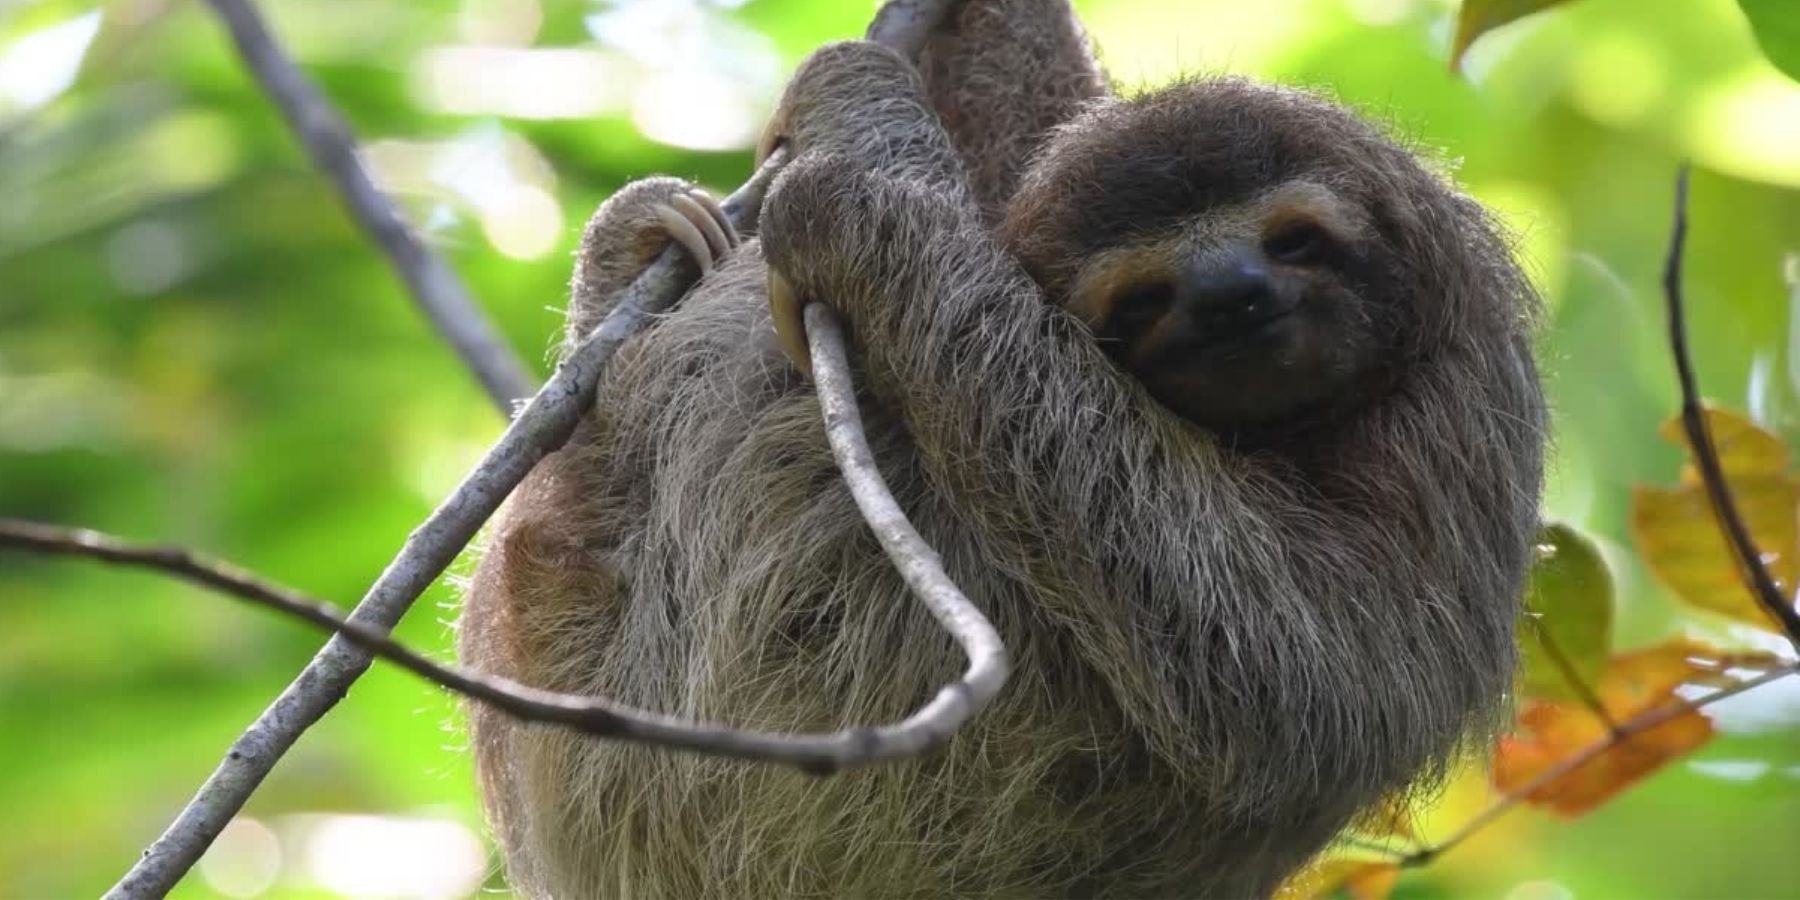 A sleepy 3 toed sloth hangs onto a branch as they sleep.